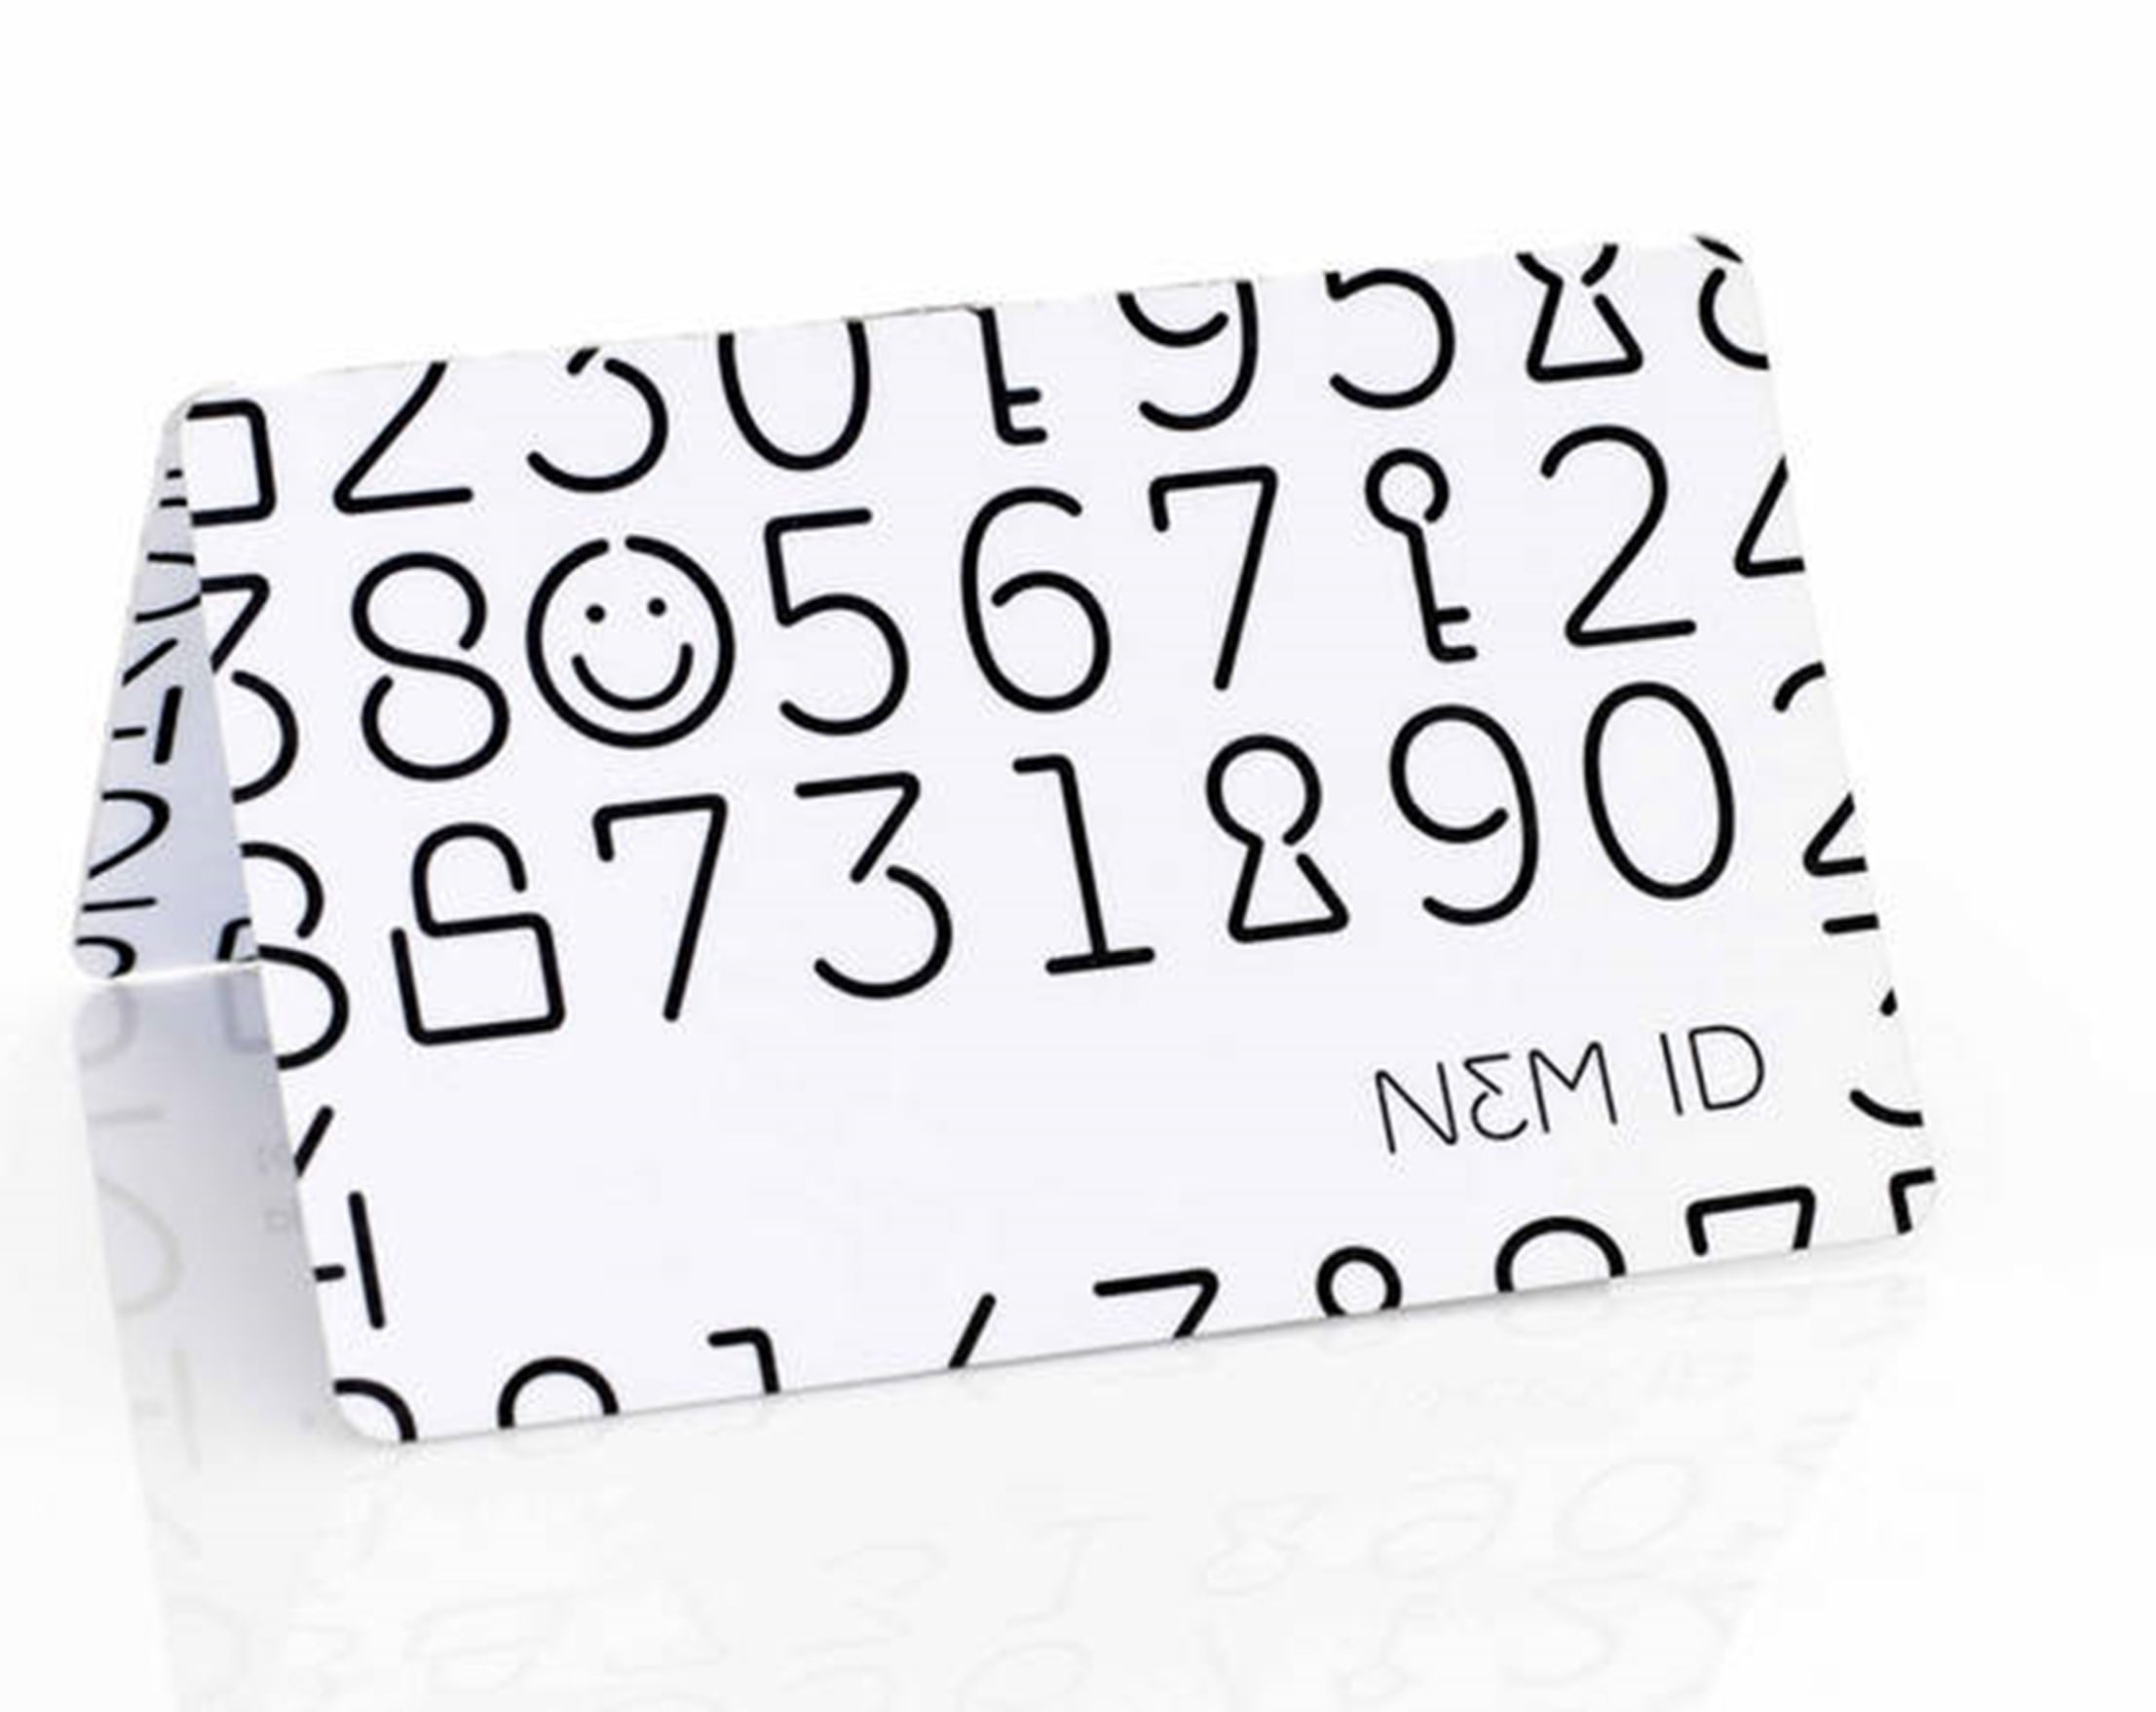 NEM ID key card